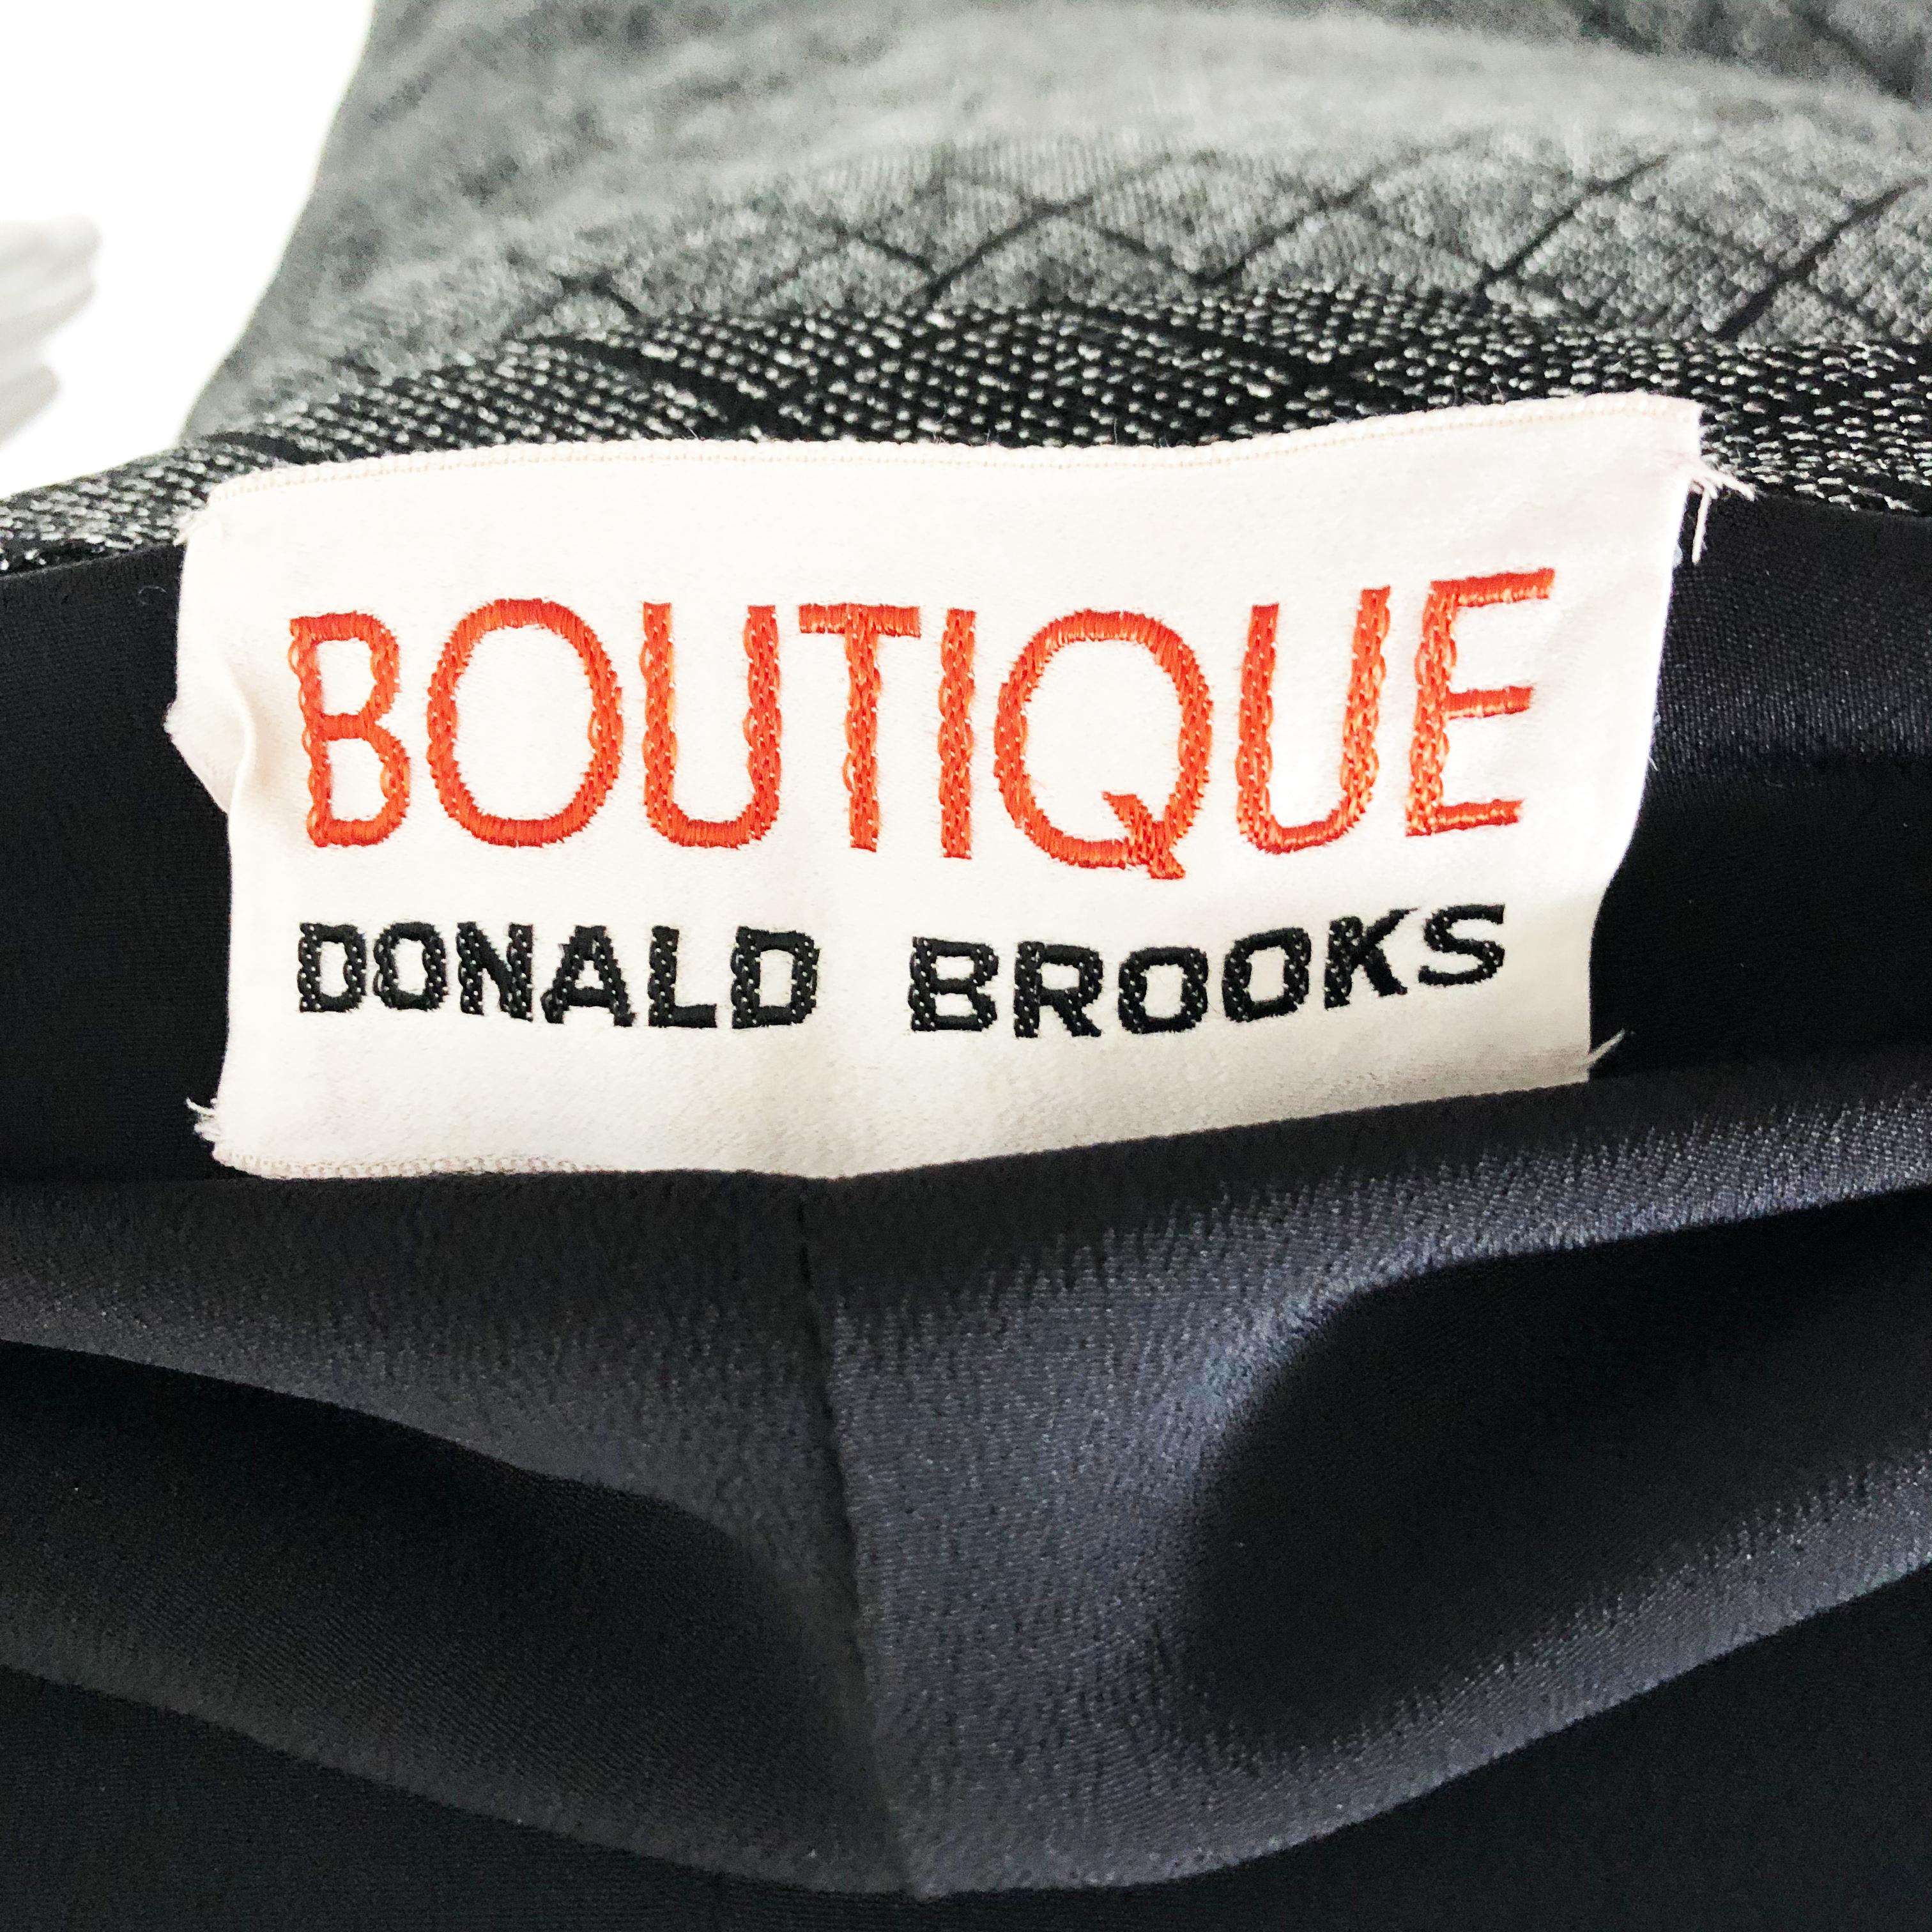 Vintage 70s Donald Brooks Boutique Maxi Dress with Metallic Diamond Pattern XS 3